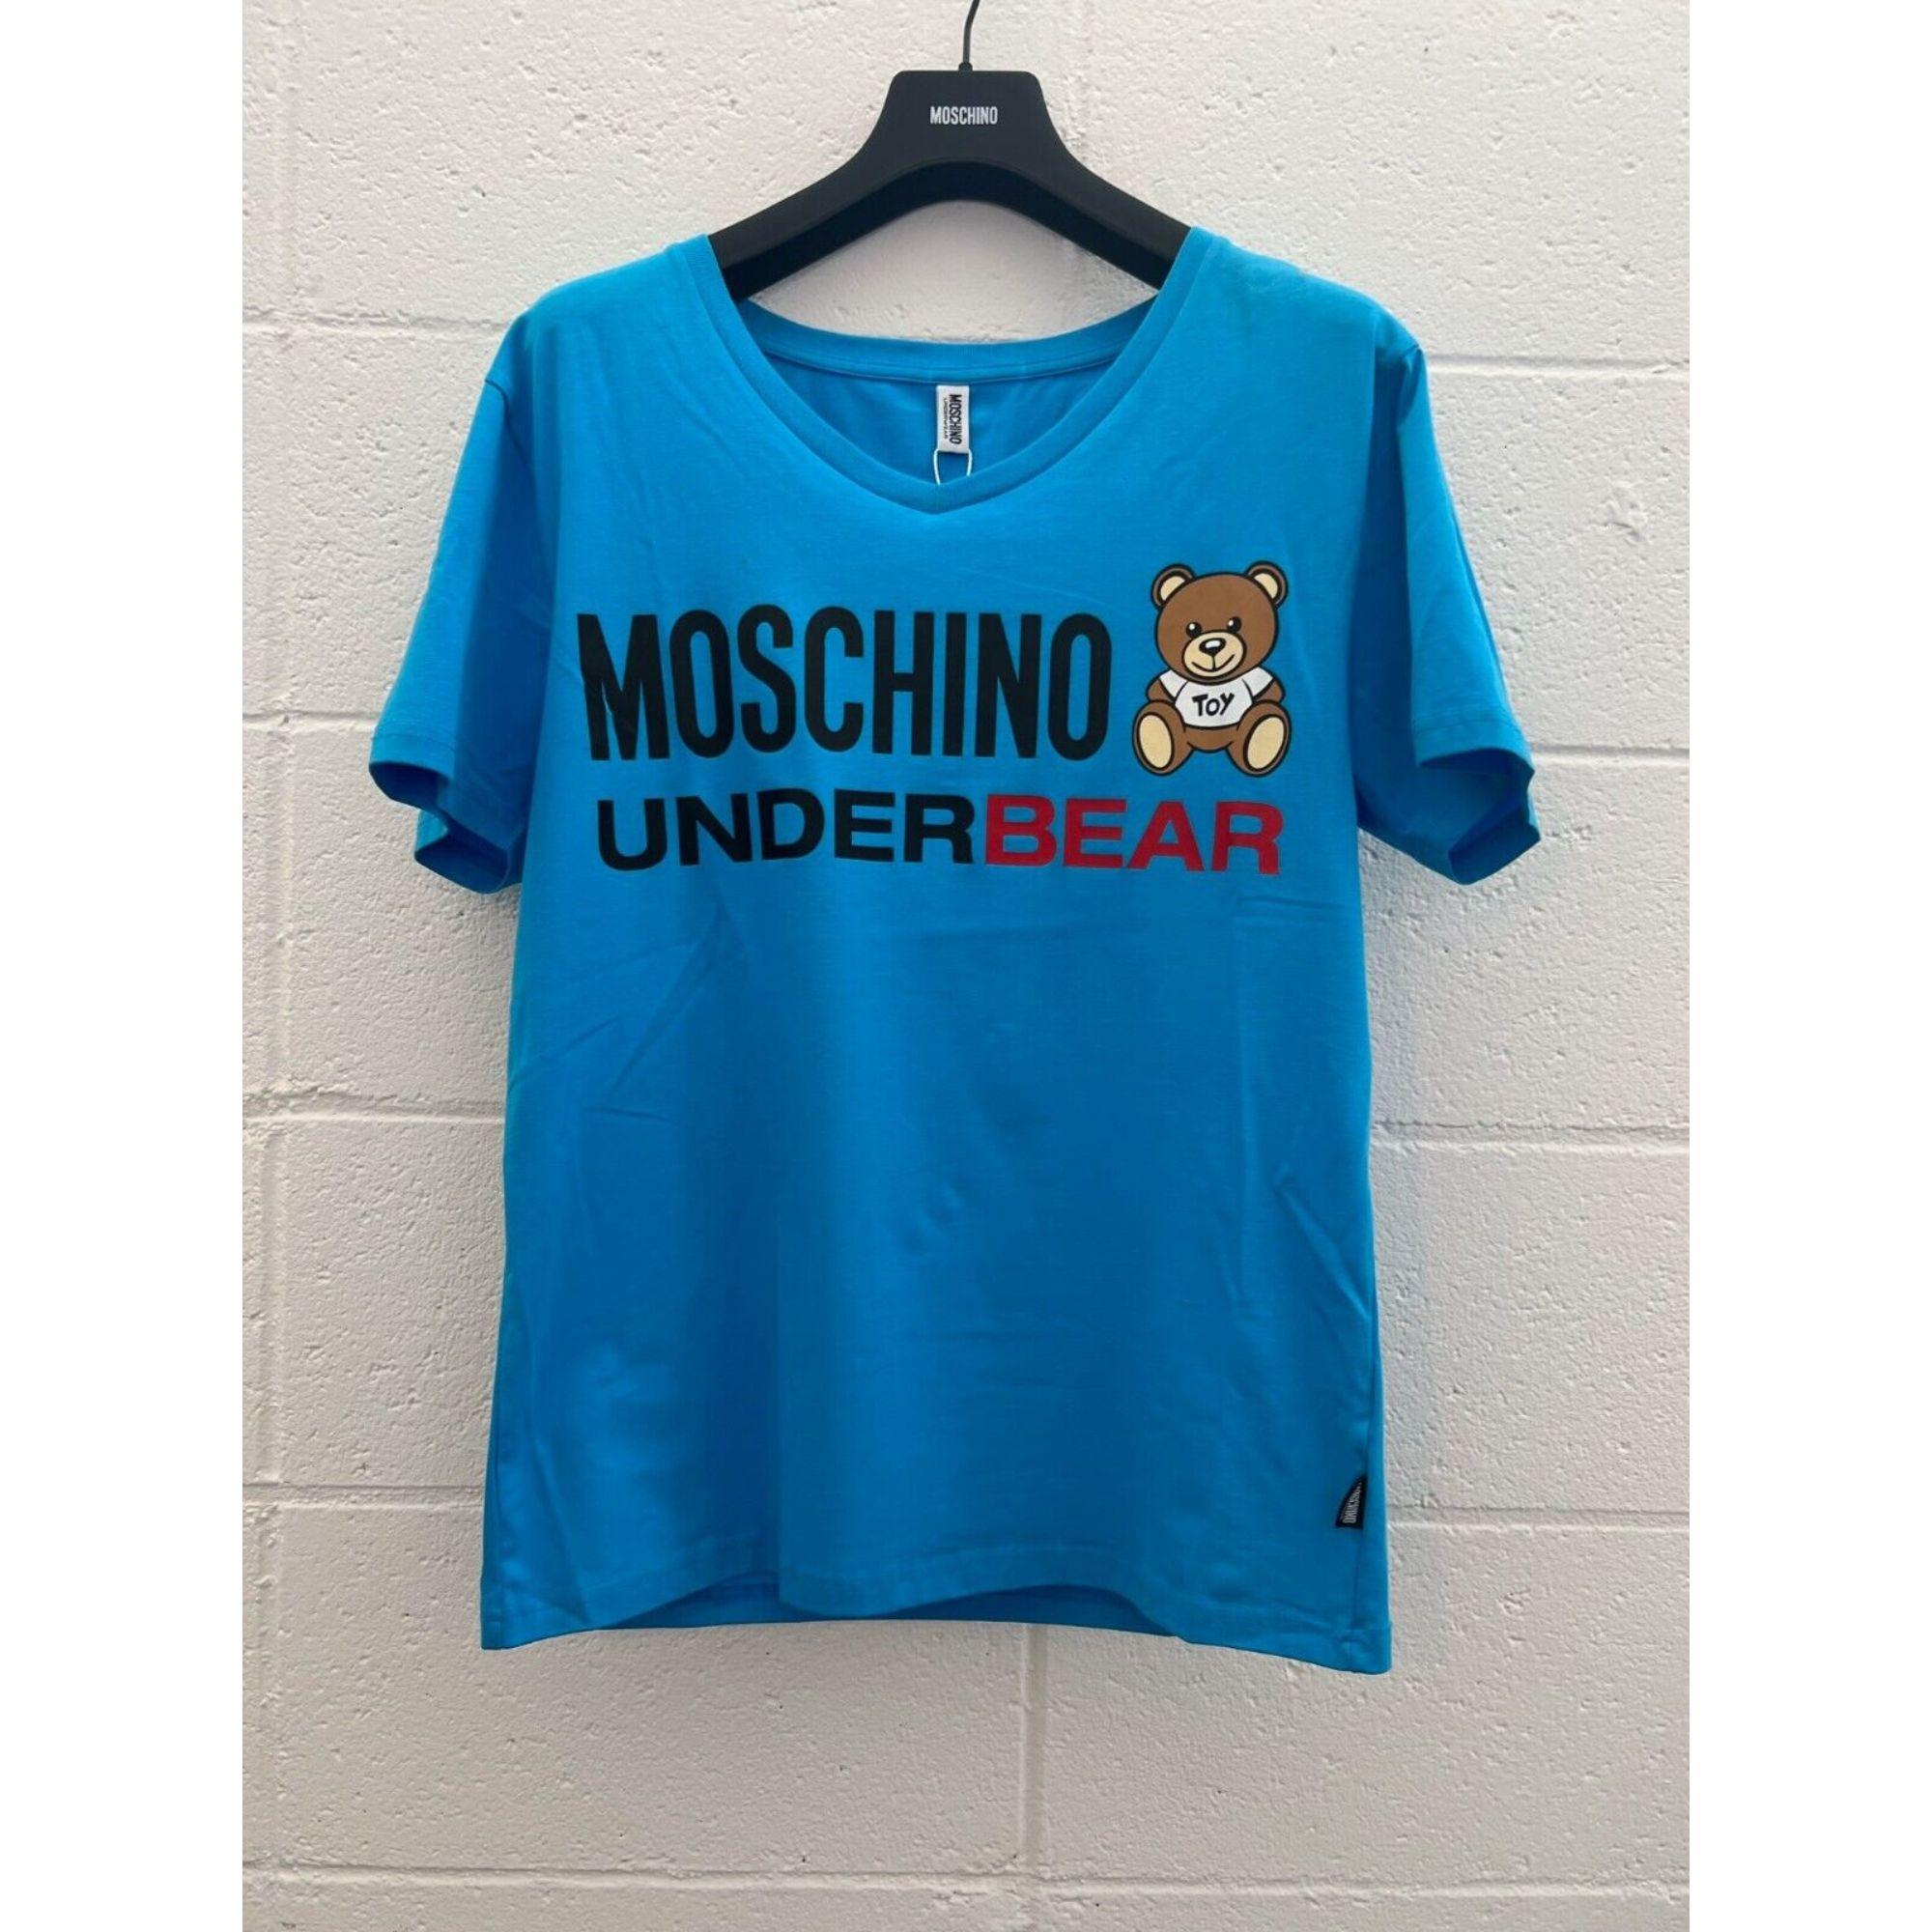 SS20 Moschino Underwear Underbear Teddy Bear T-shirt by Jeremy Scott, Size XL